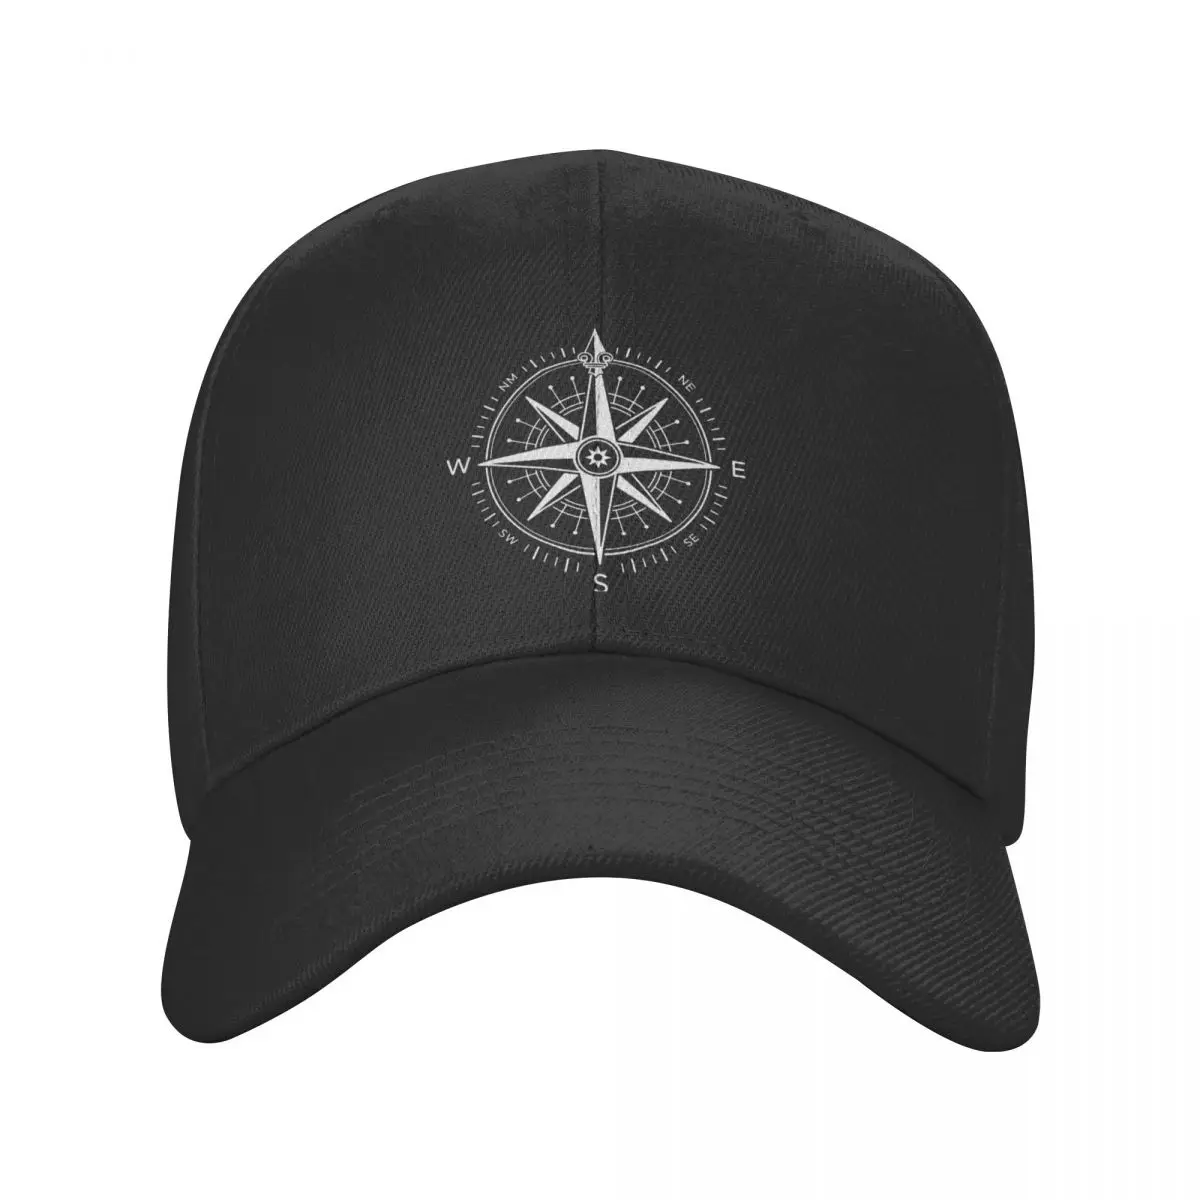 For Men Women Sports Snapback Caps Trucker Hats